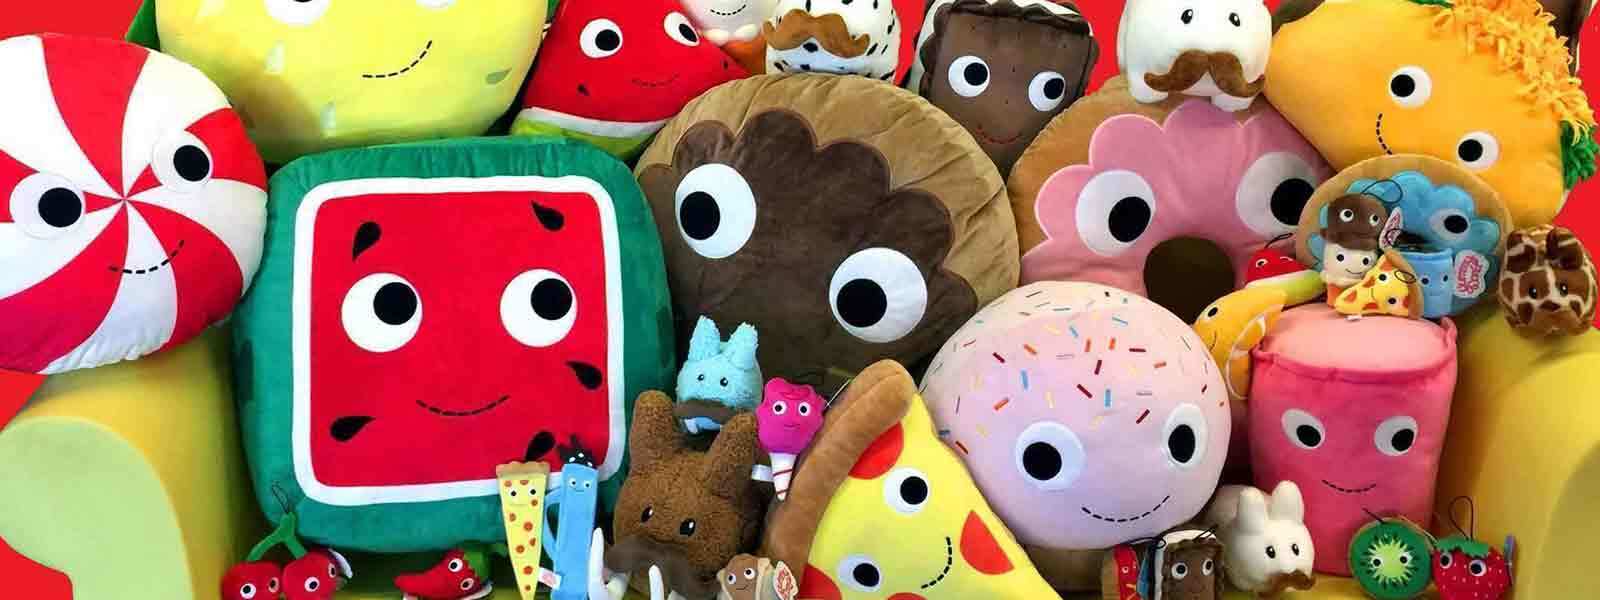 China's designer toy craze: How long will it last?